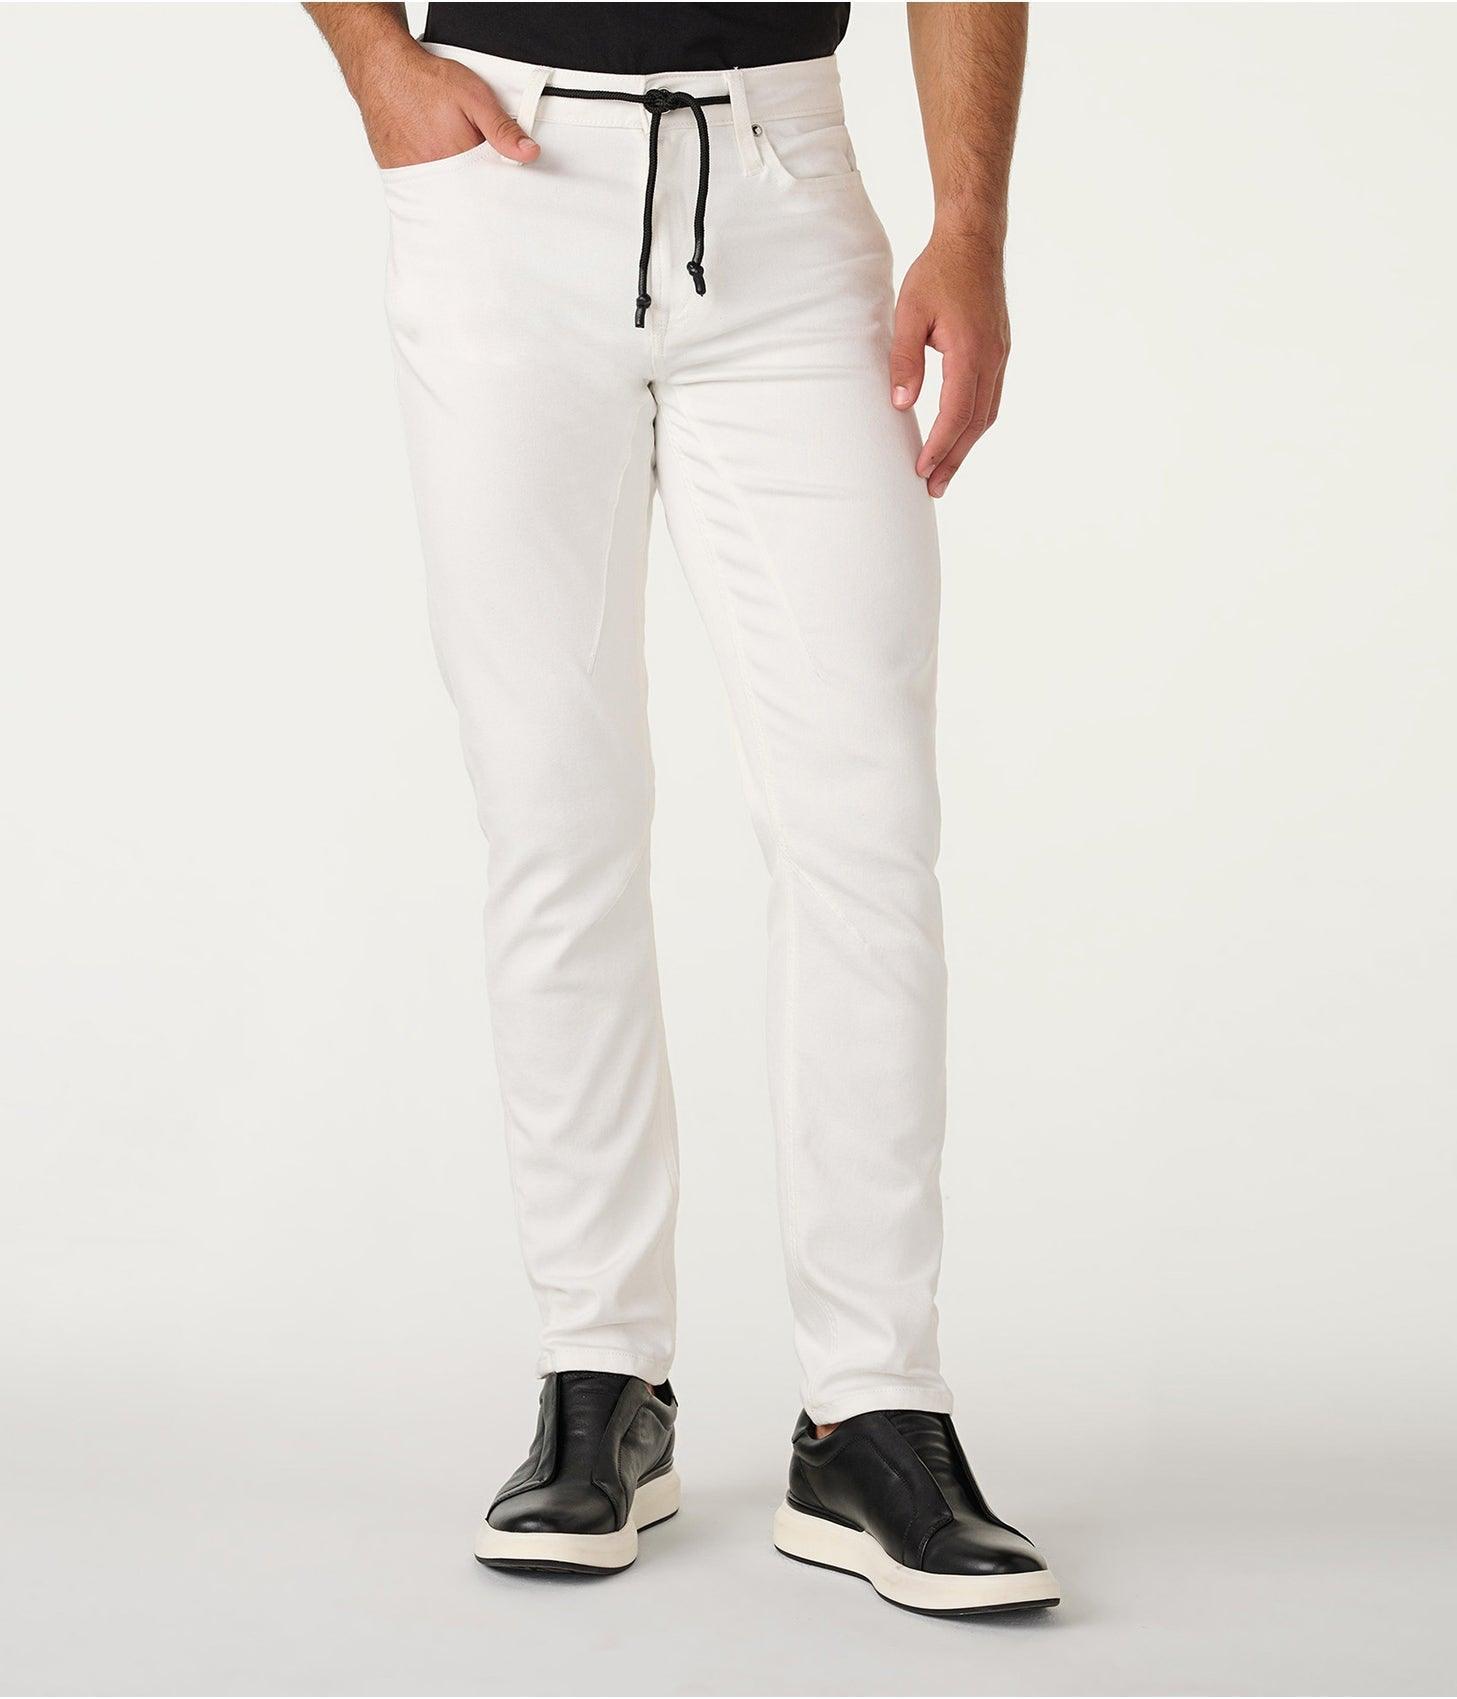 Strech Denim Karl Lagerfeld 5 Pocket - Blanco - tiendadicons.com